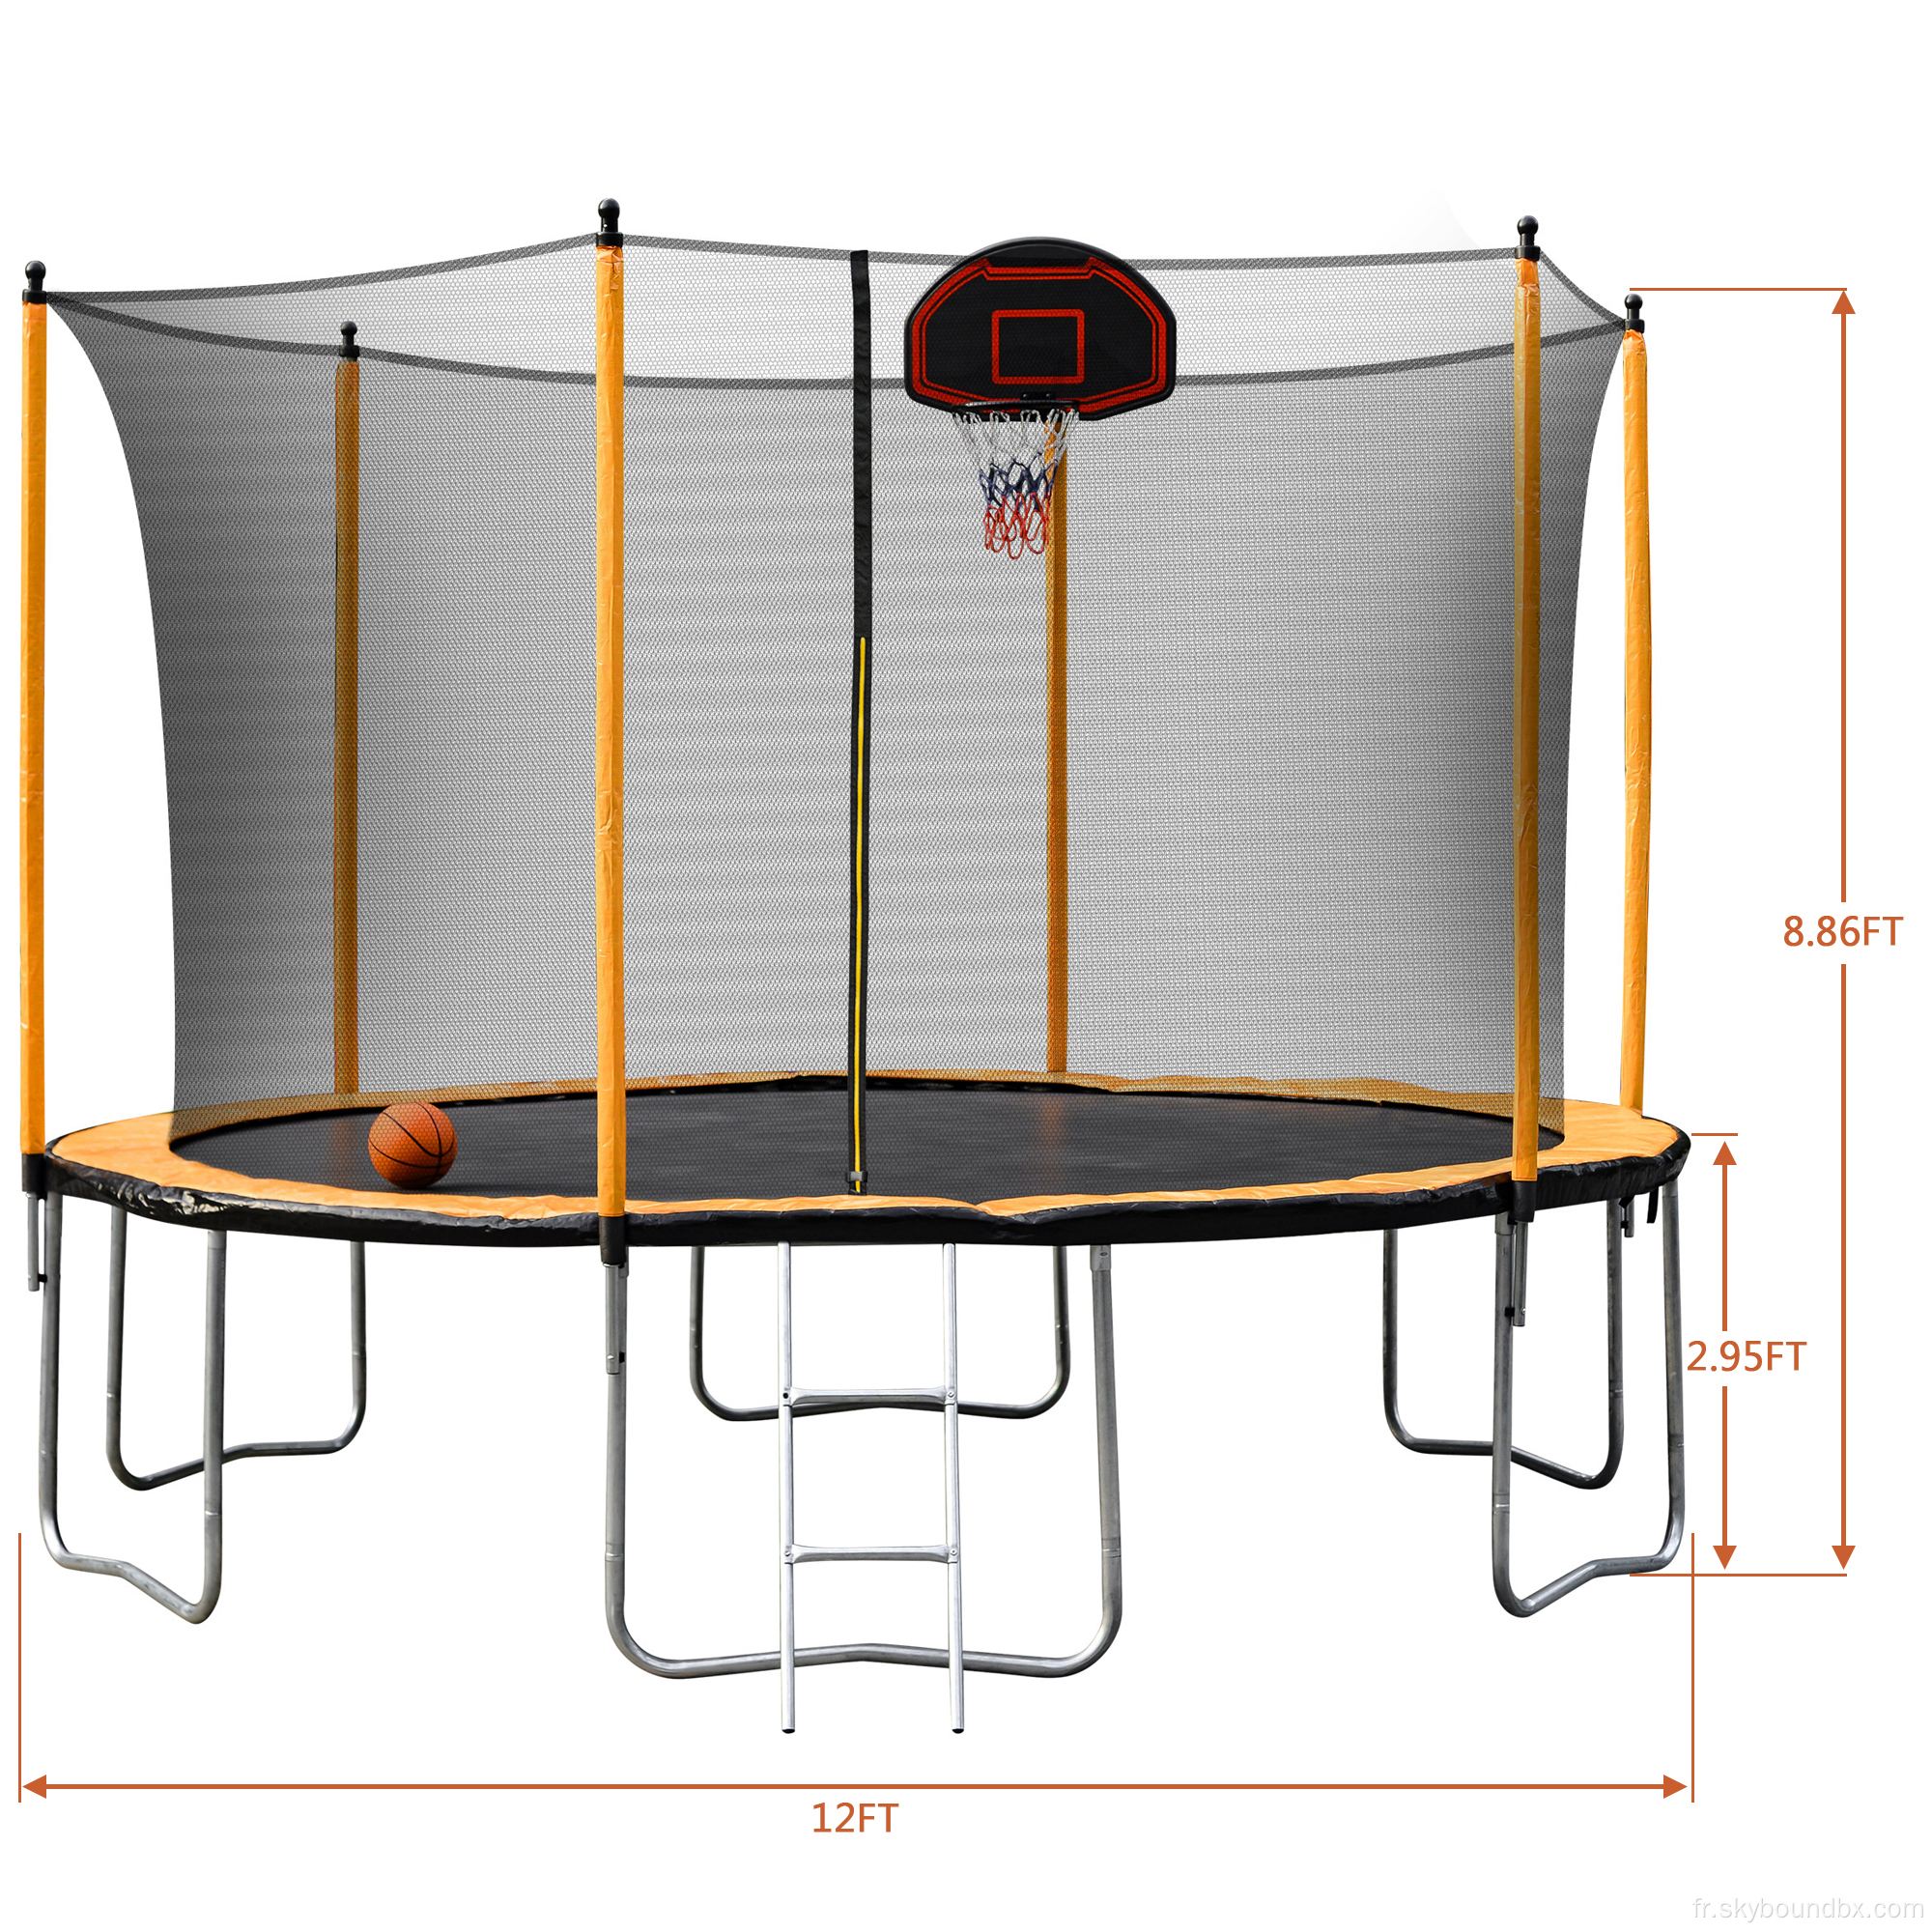 Trampoline de 12 pieds et enceinte avec cerceau de basket-ball